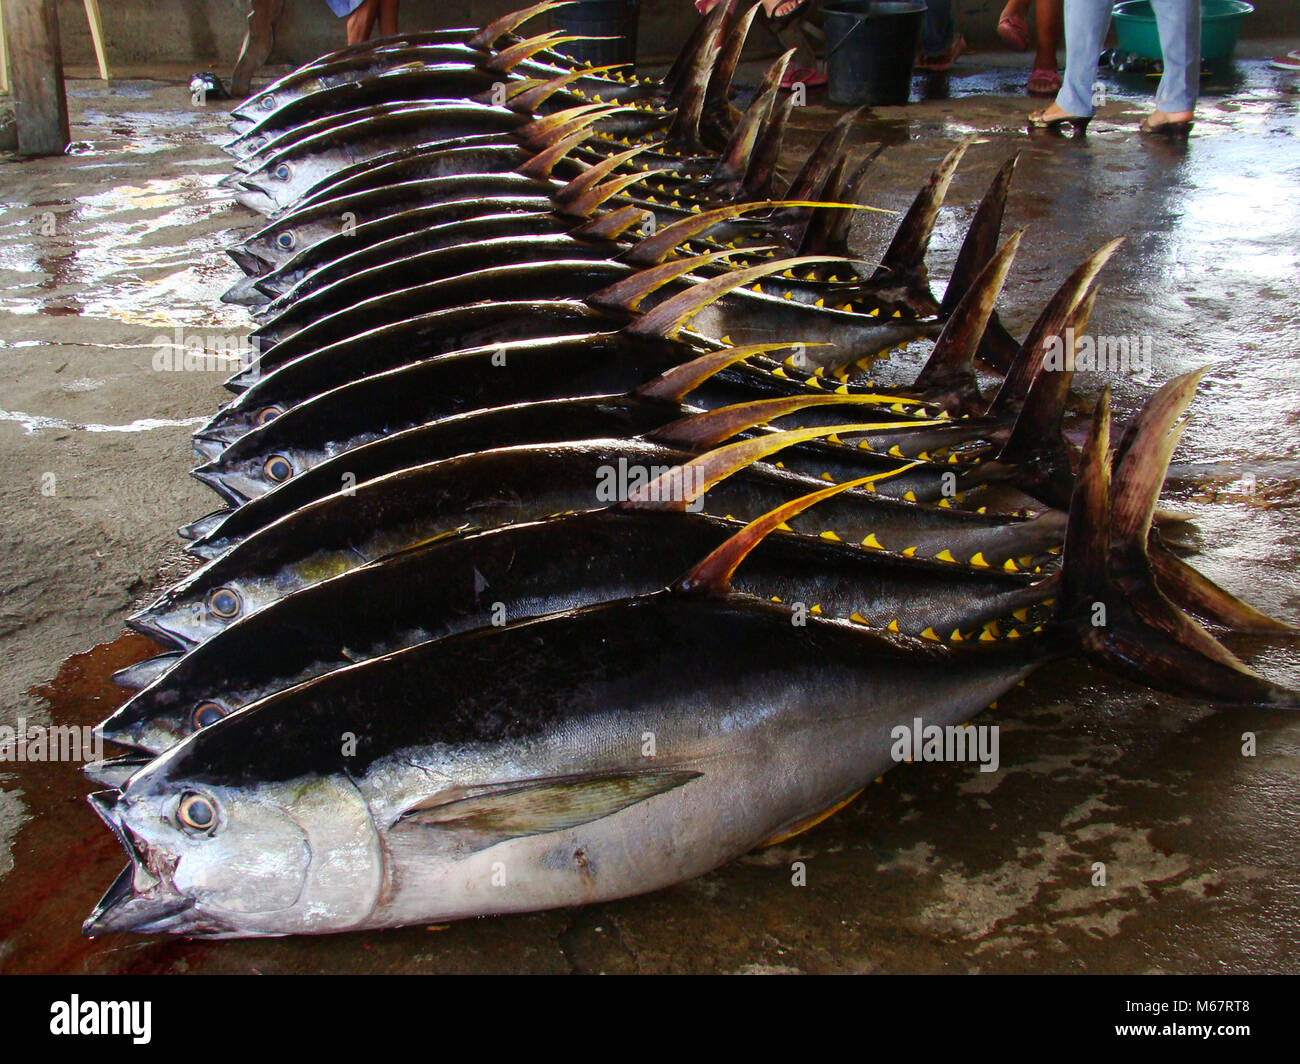 yellowfin tuna Thunnus albacares freshly landed by the artisanal fishermen in Mindoro, Philippines Stock Photo